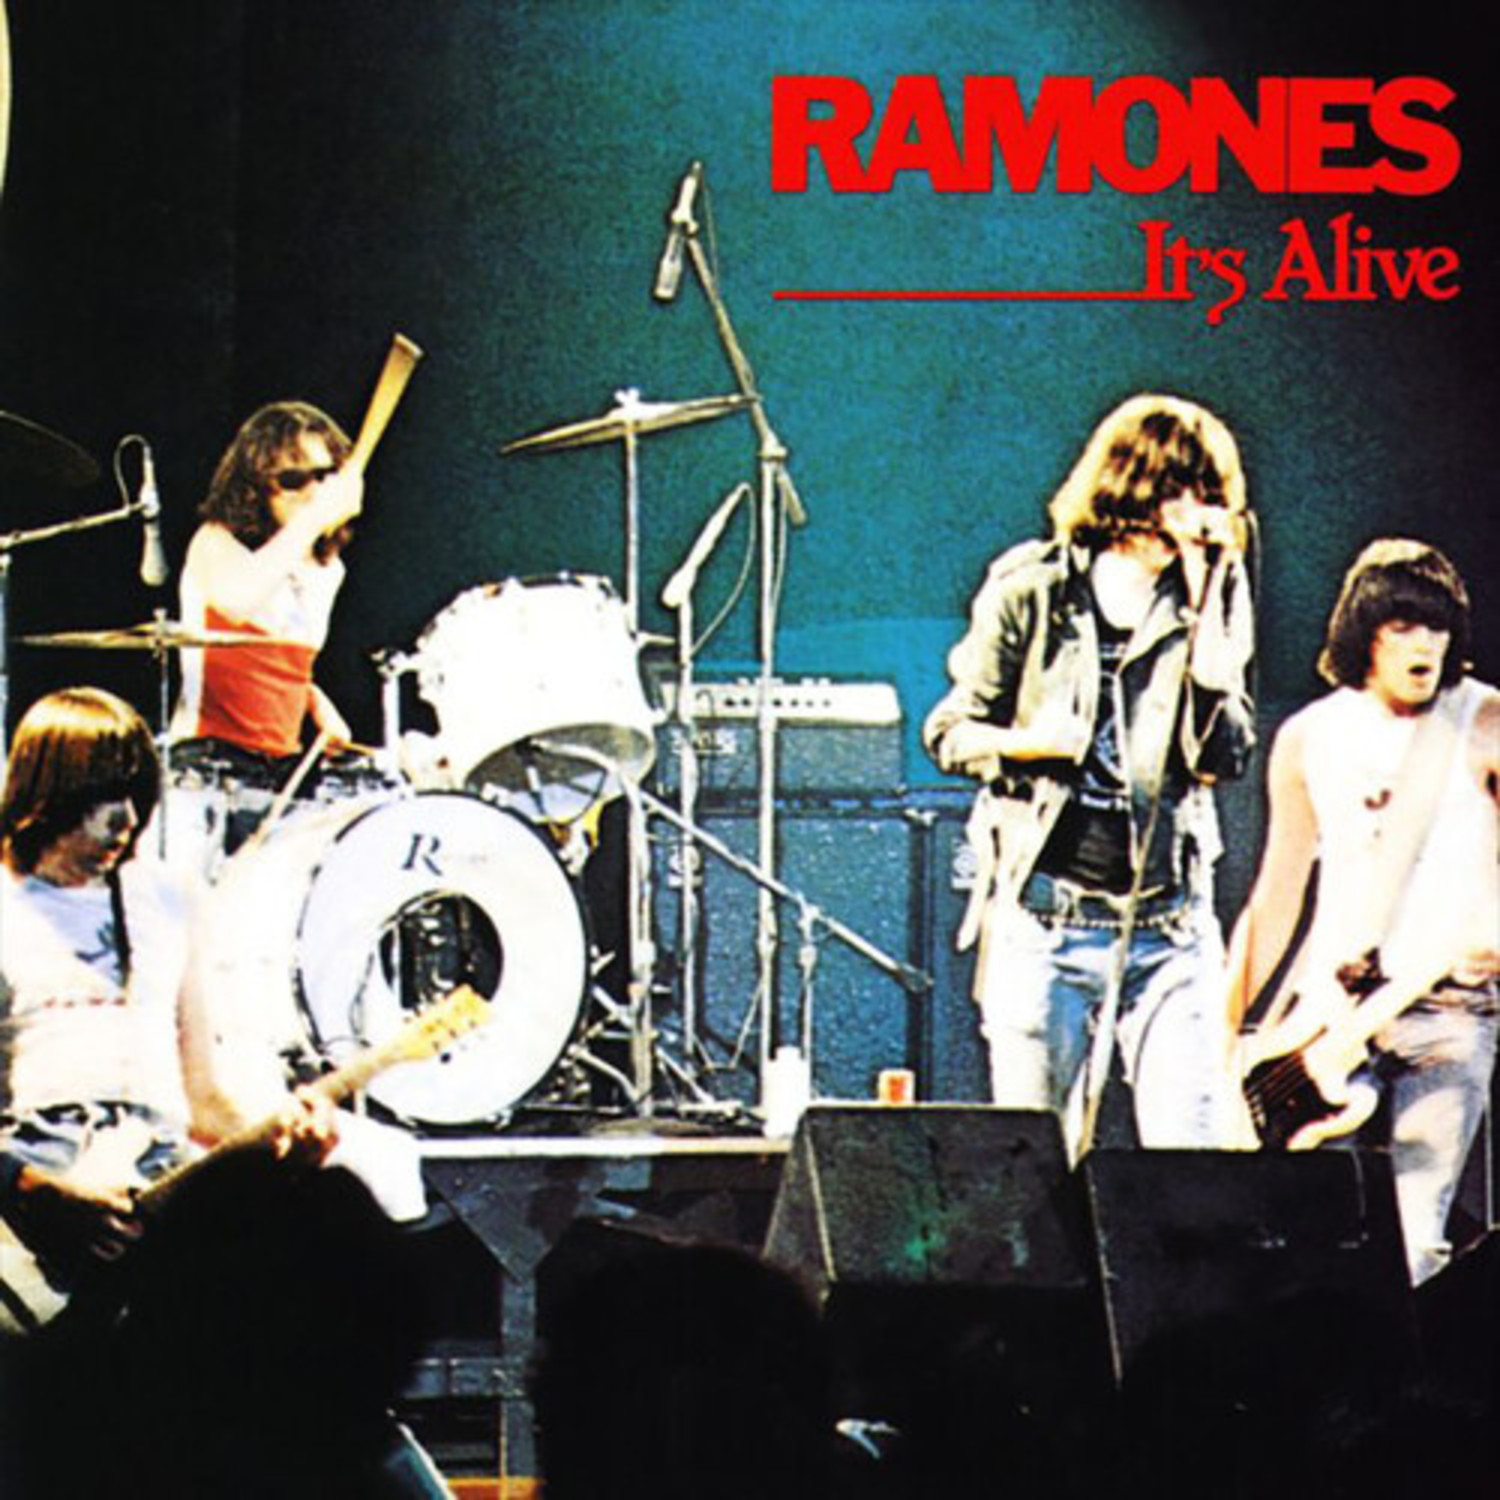 Ramones - It's Alive 2LP - Wax Trax Records